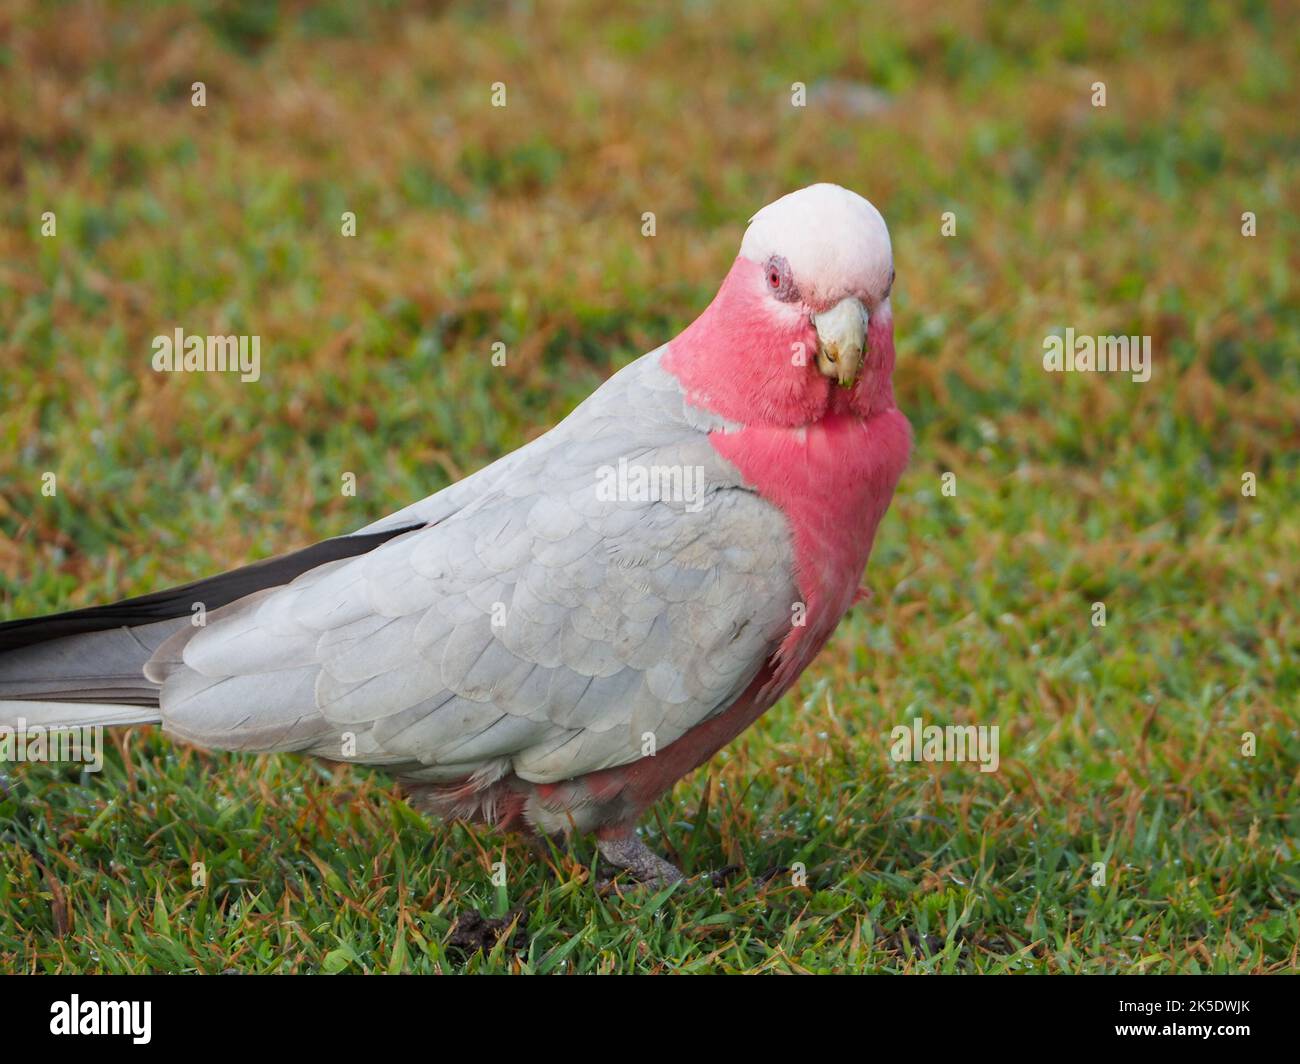 Australian Native Bird, a Galah or Pink and Grey Cockatoo, feeding on a wet grassy headland, red pink eye indicates female, Australia Stock Photo